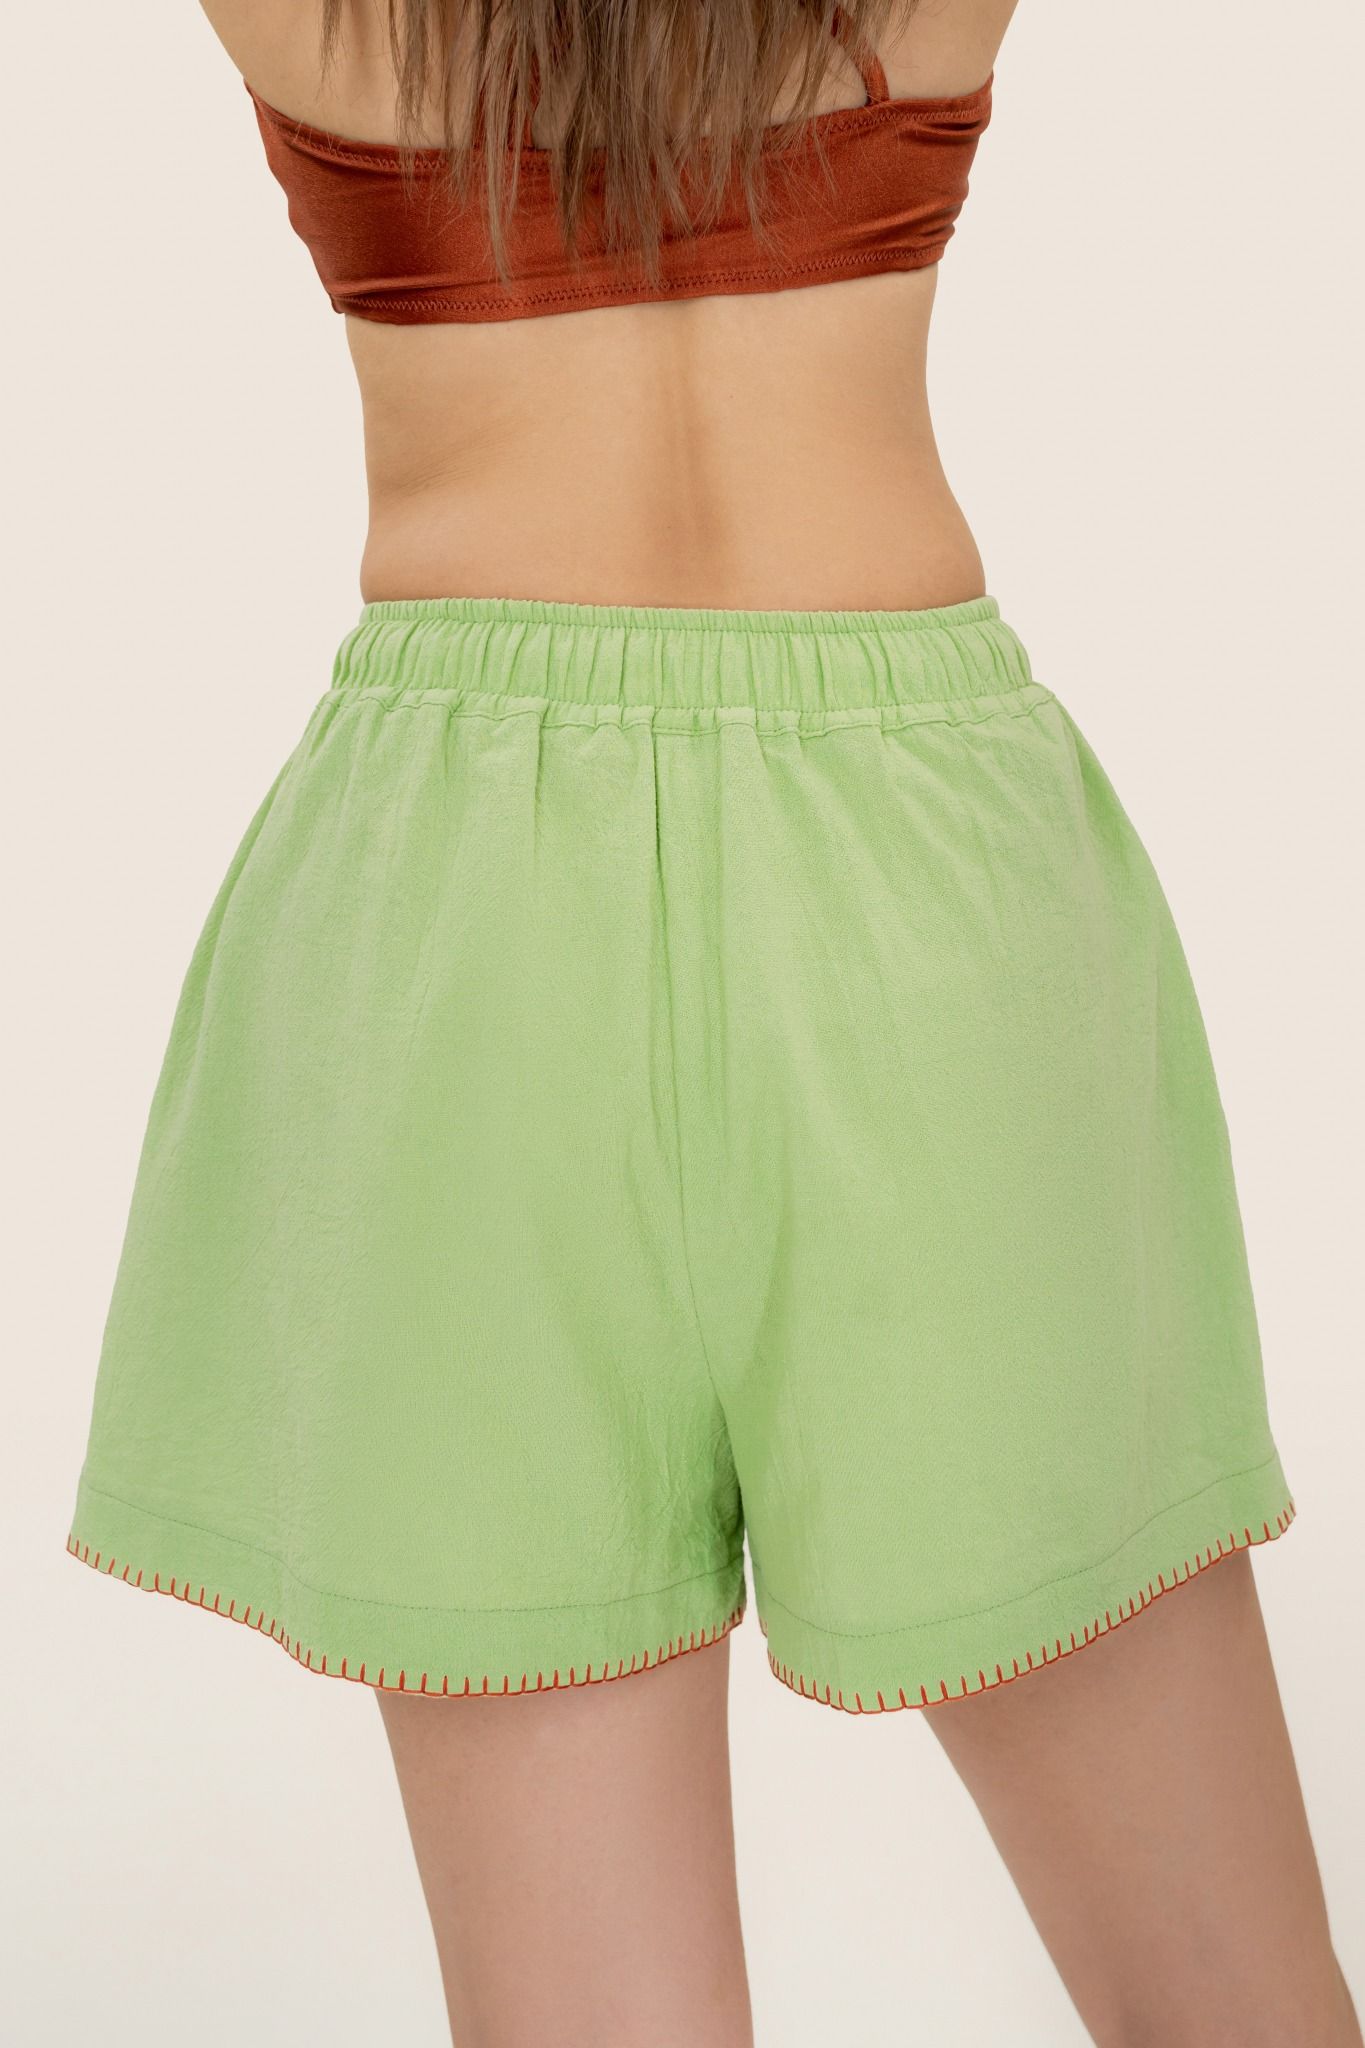  Green Kiwi Embroidered Shorts 